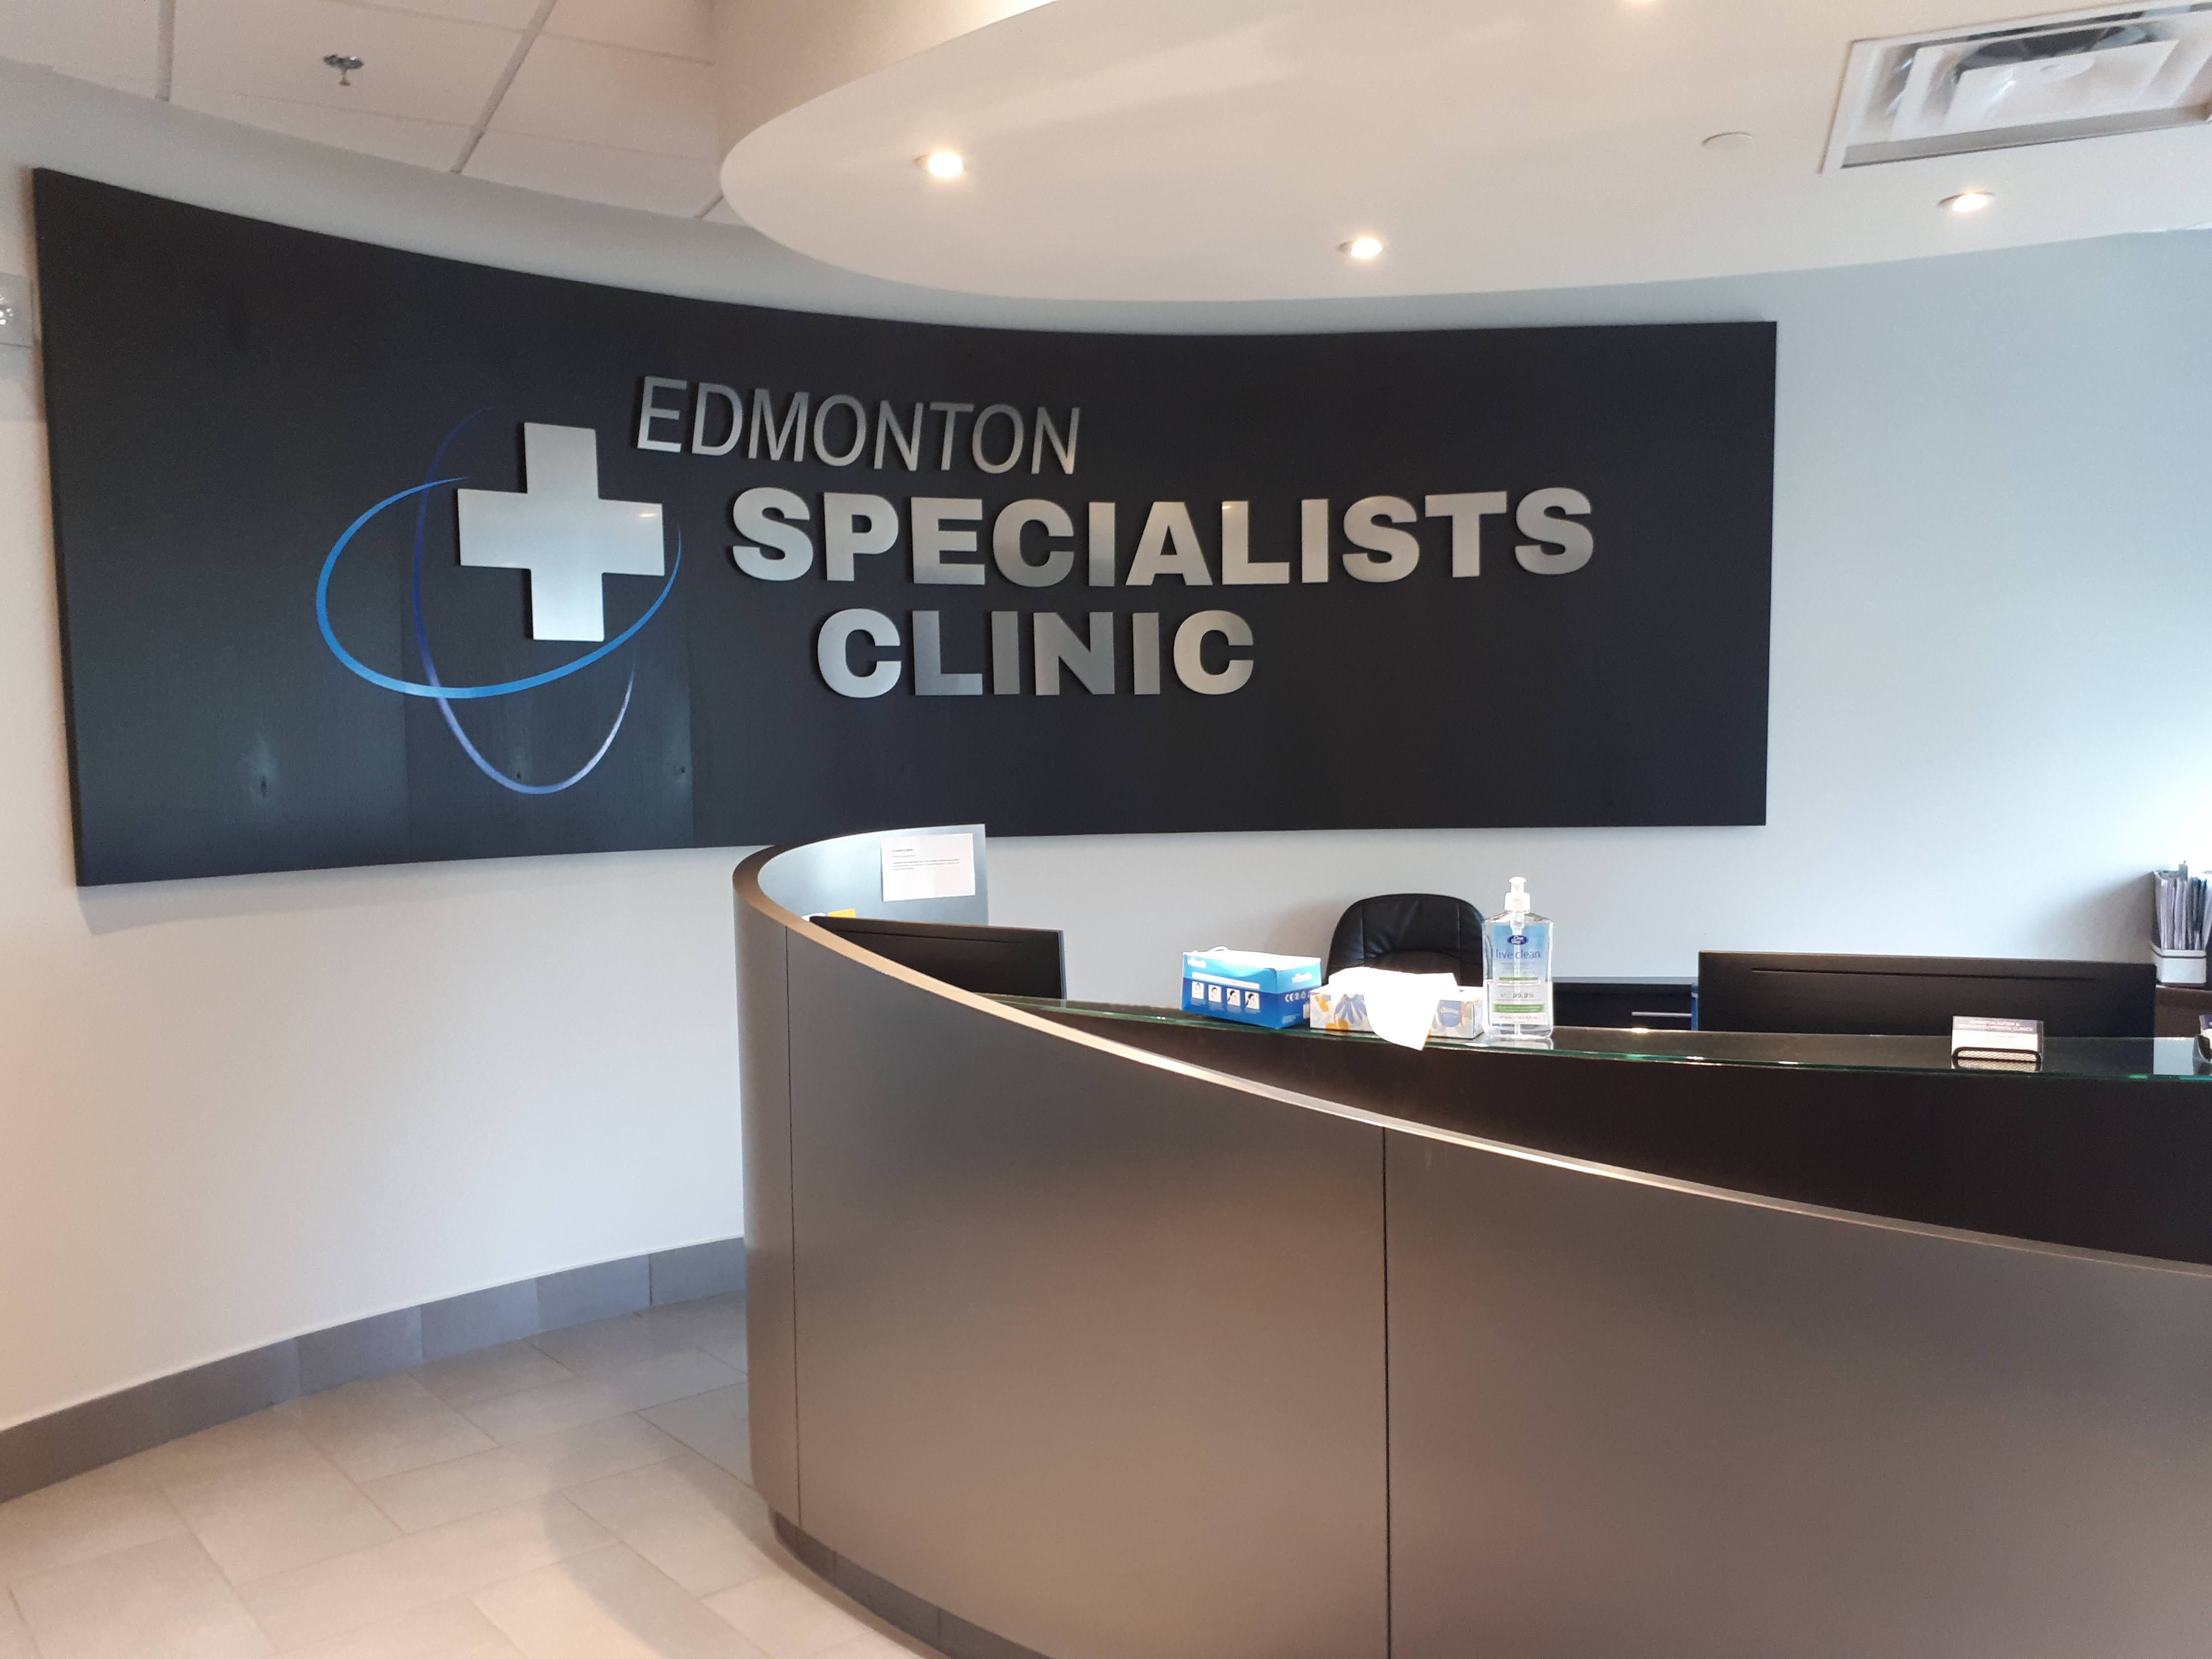 Edmonton Specialists Clinic